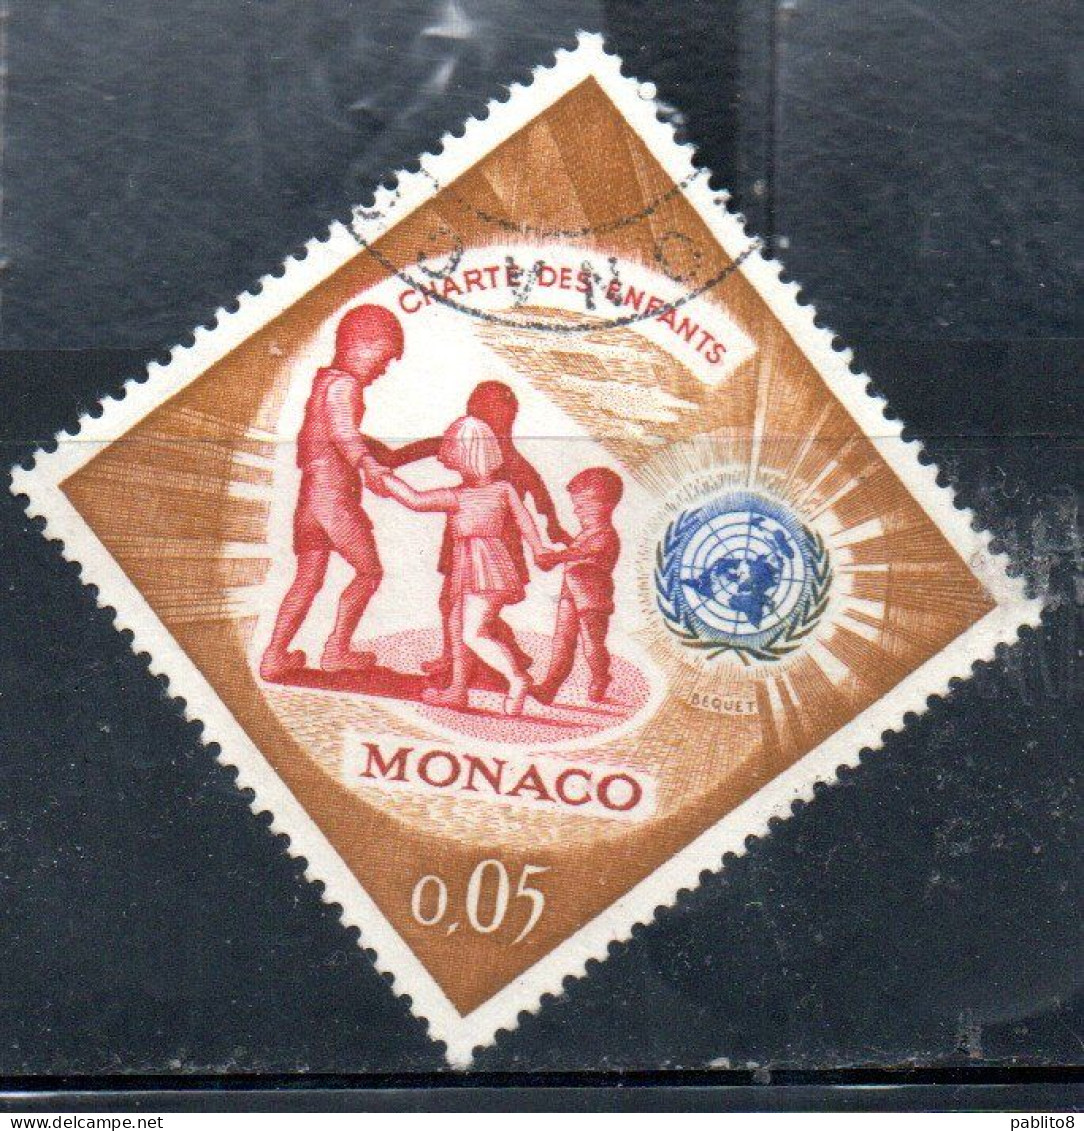 MONACO 1963 UN ONU CHILDREN' CHARTER DANCING AND UN ONU EMBLEM 5c USED USATO OBLITERE' - Gebraucht